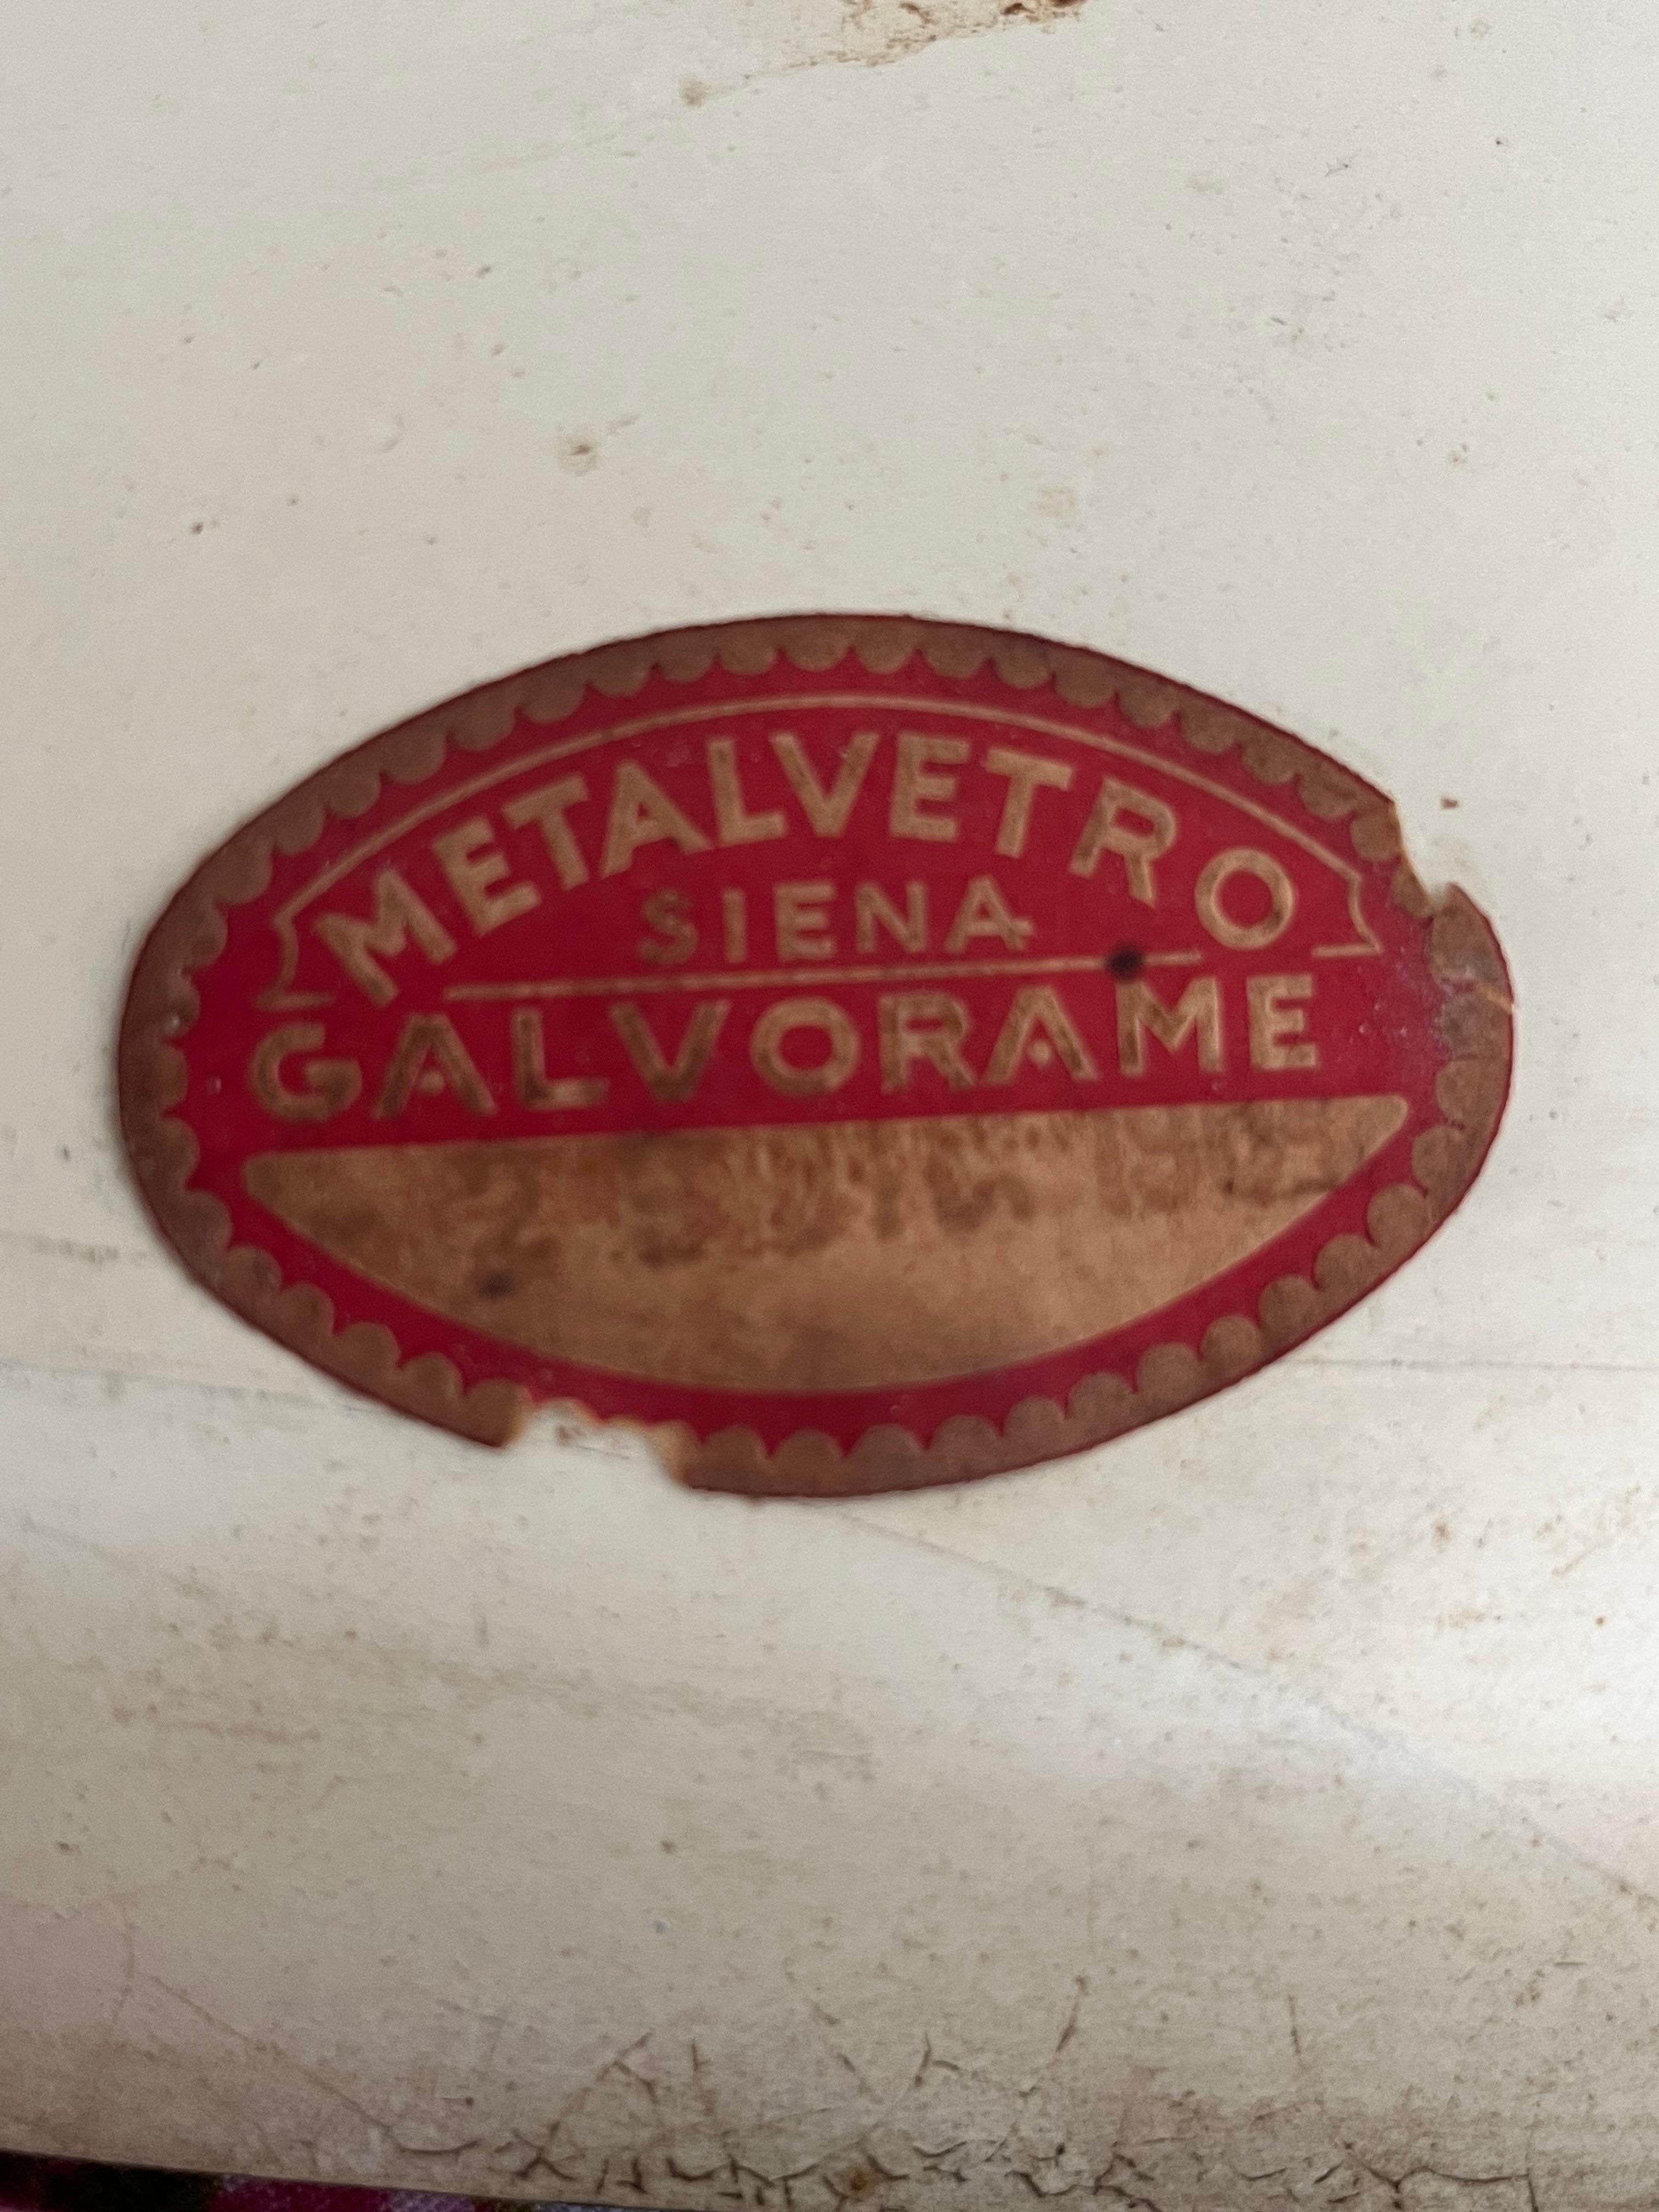 Metalvetro Galvorame Italian 1960s Midcentury Round Mirror In Good Condition For Sale In Palermo, IT